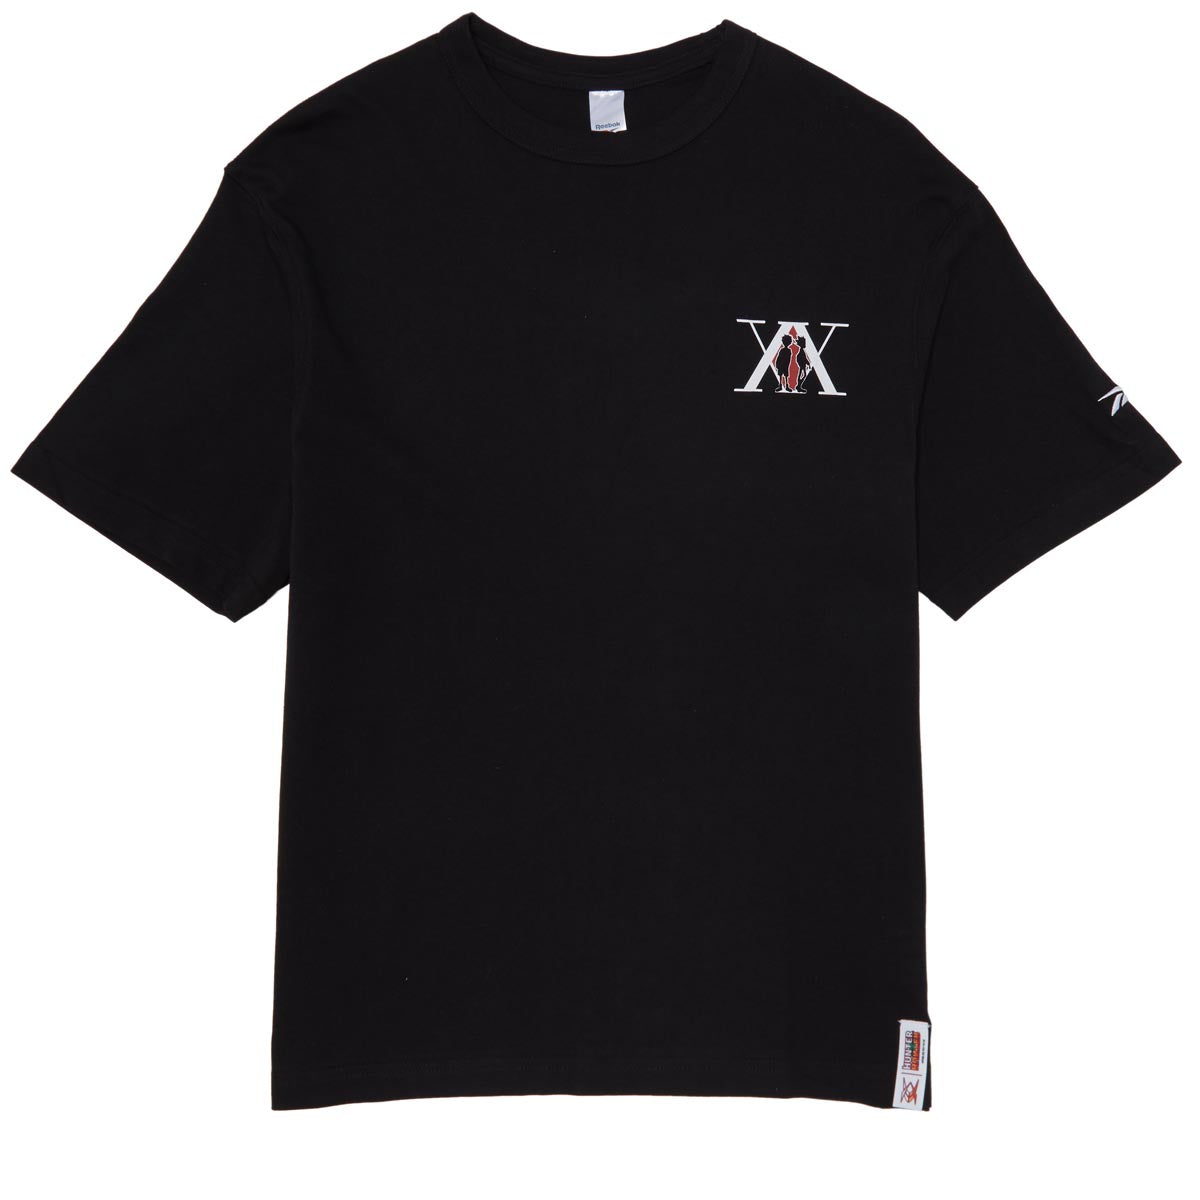 Reebok x Hunter x Hunter T-Shirt - Black image 2